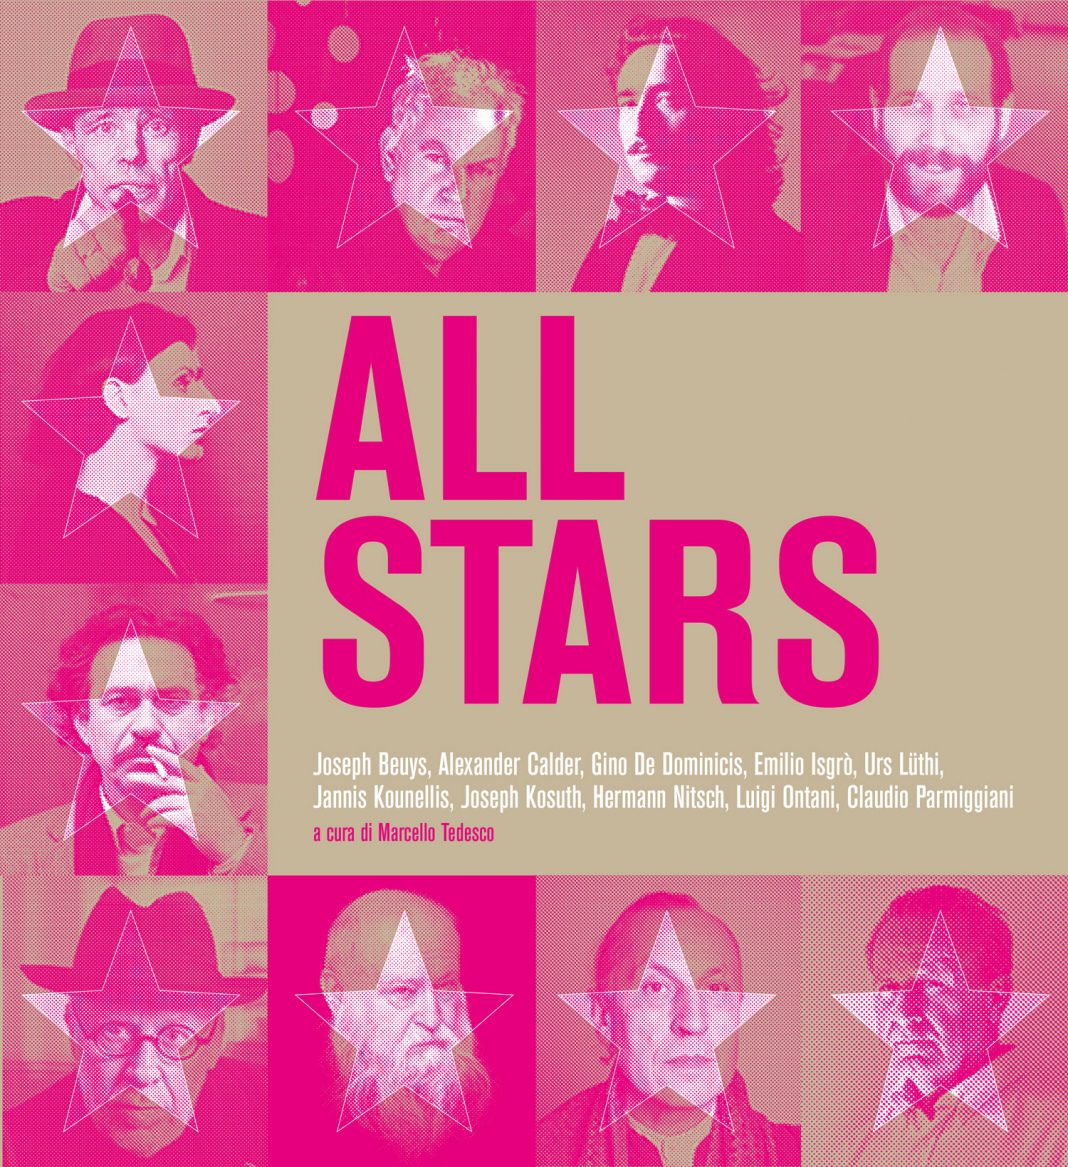 All stars. L’impensato come linguaggio umanohttps://www.exibart.com/repository/media/formidable/11/img/0eb/MTN_All_STARS_Visual_1500pxl-1068x1167.jpg